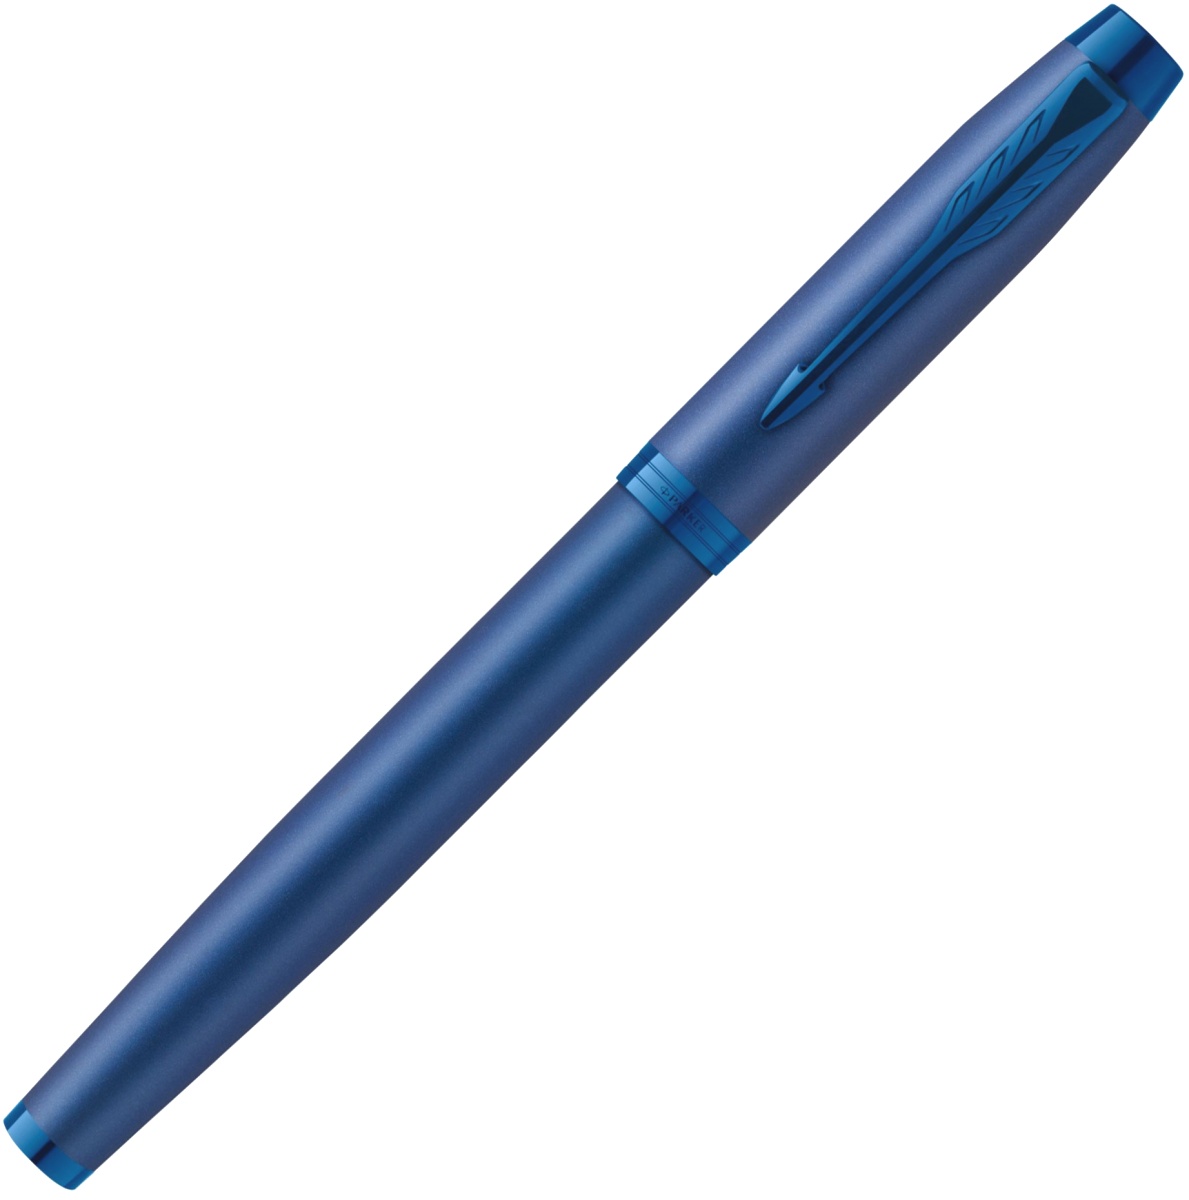  Ручка-роллер Parker IM Monochrome T328, Blue PVD, фото 2